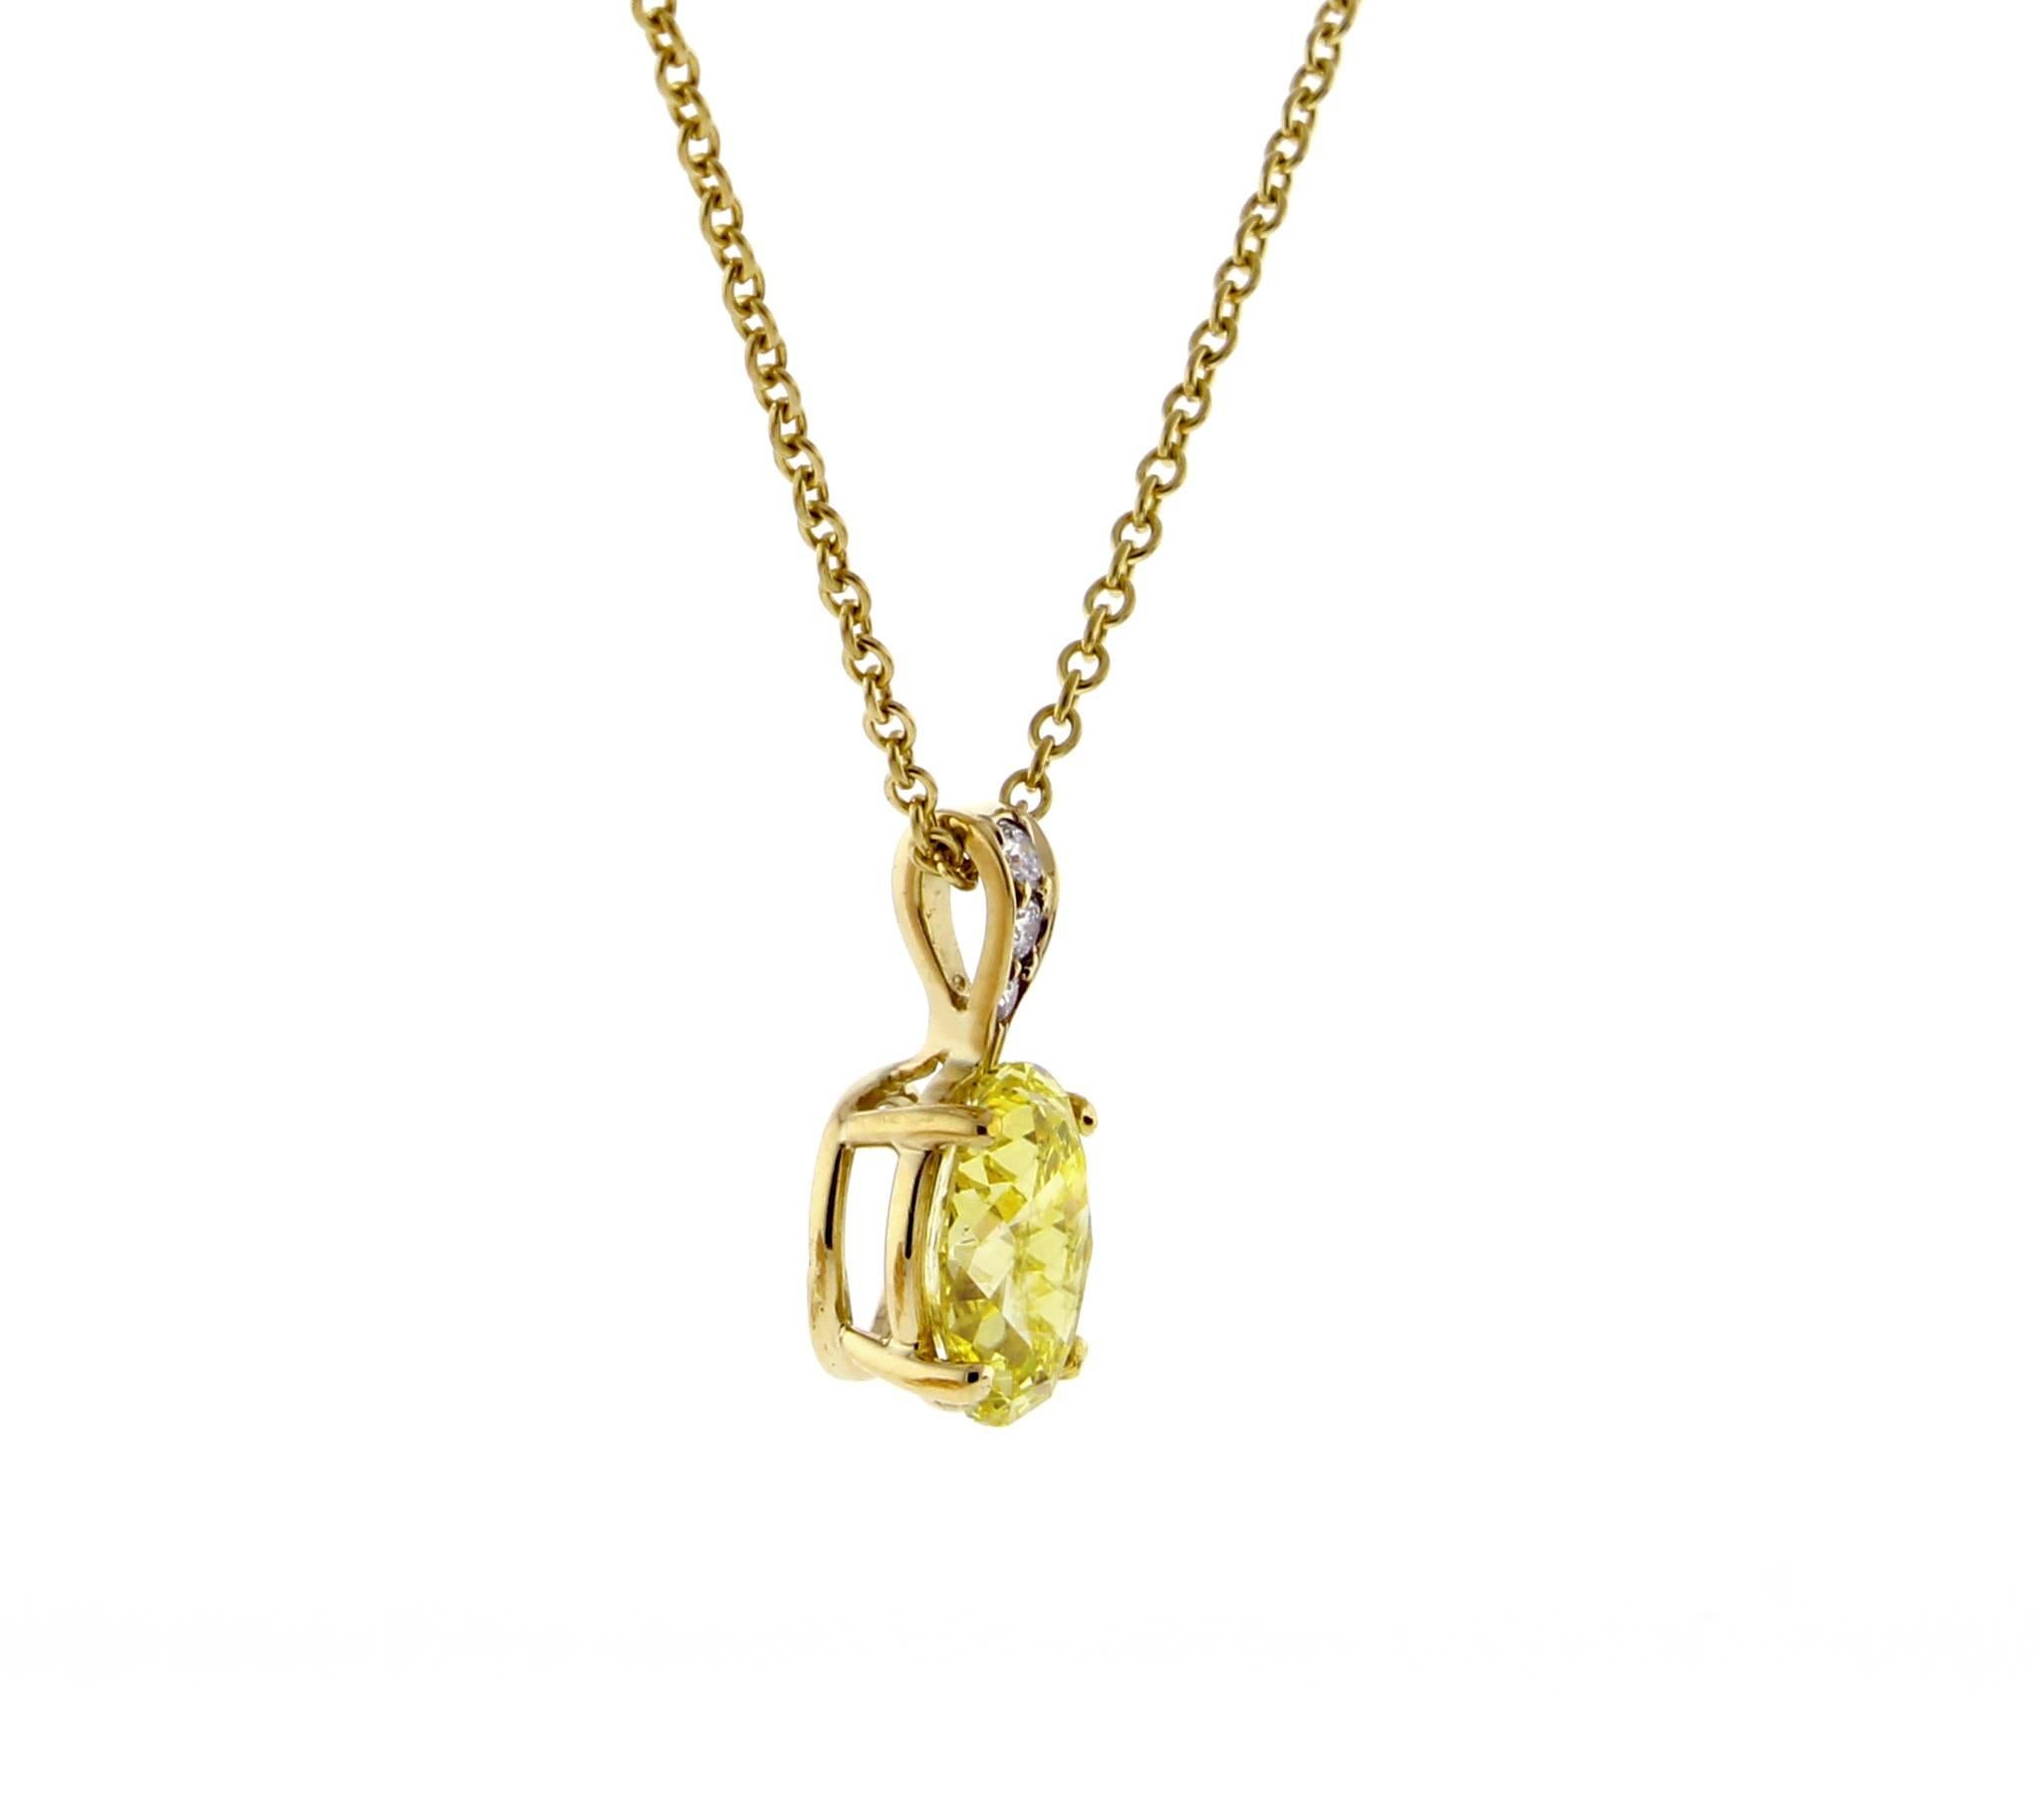 A dazzling oval Fancy Intense yellow  Tiffany diamond shines like the sun on a chain of 18 karat gold. On a 16